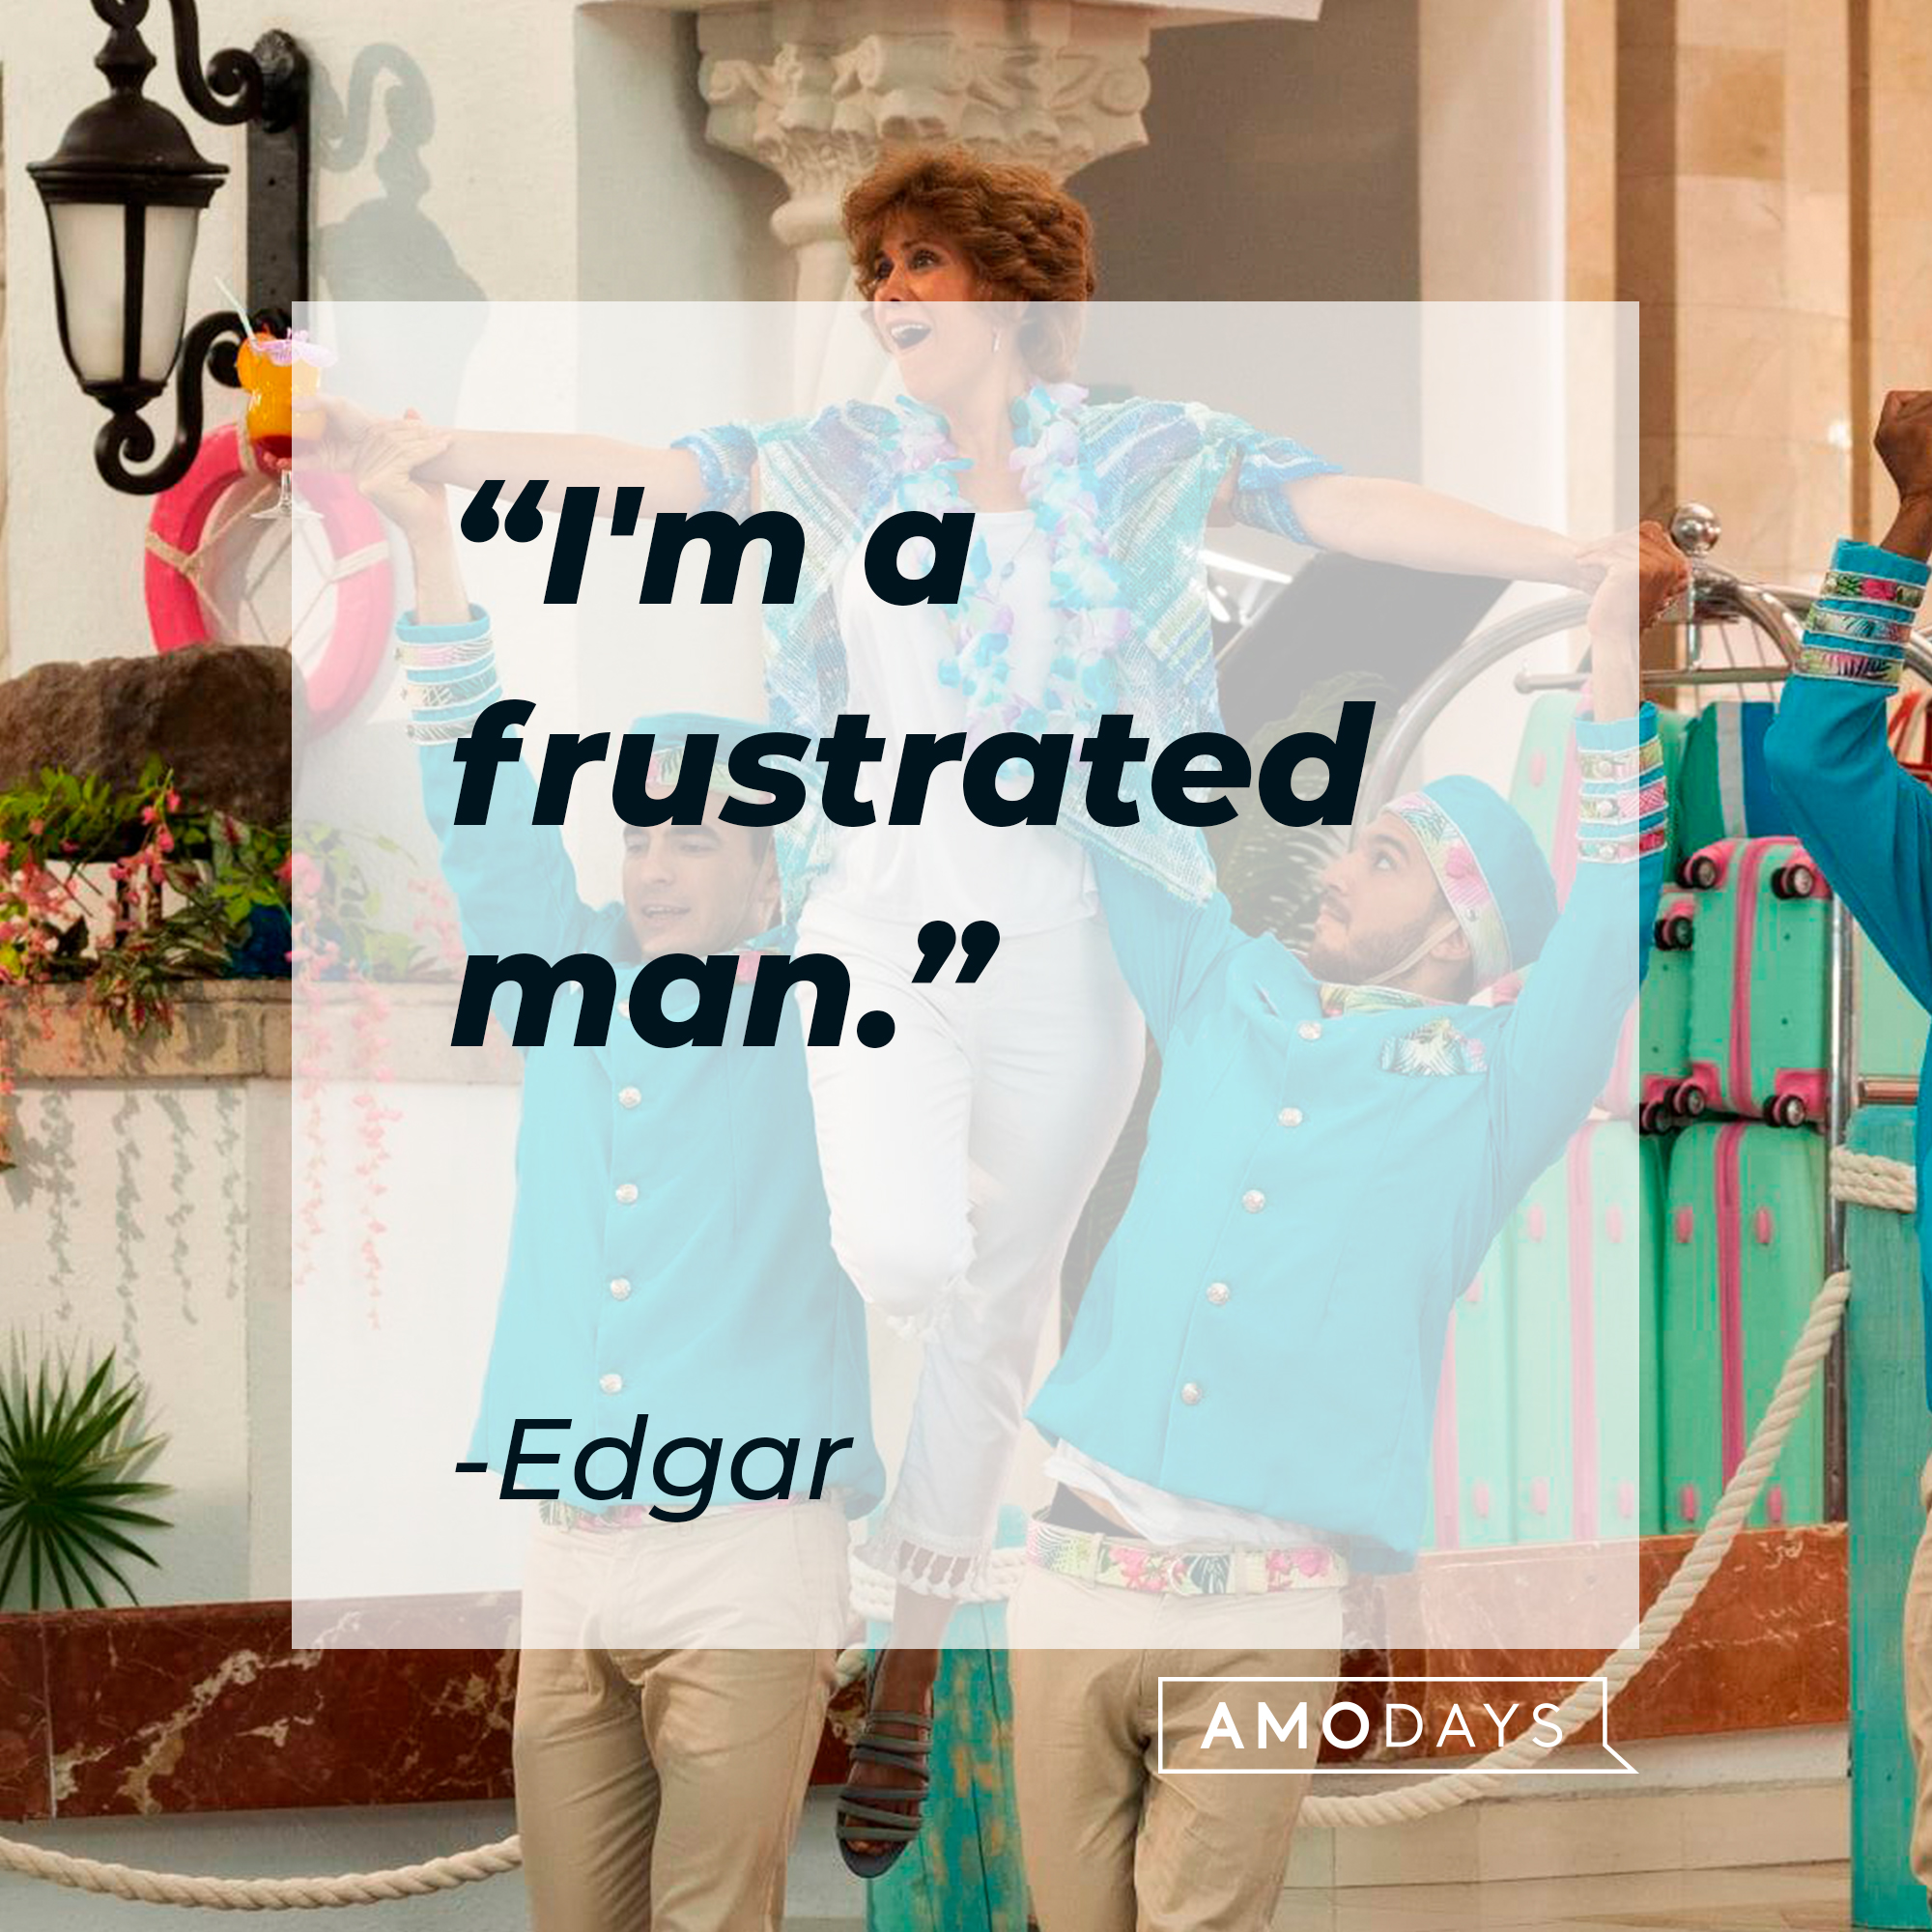 Edgar's quote: "I'm a frustrated man." | Source: facebook.com/BarbAndStar